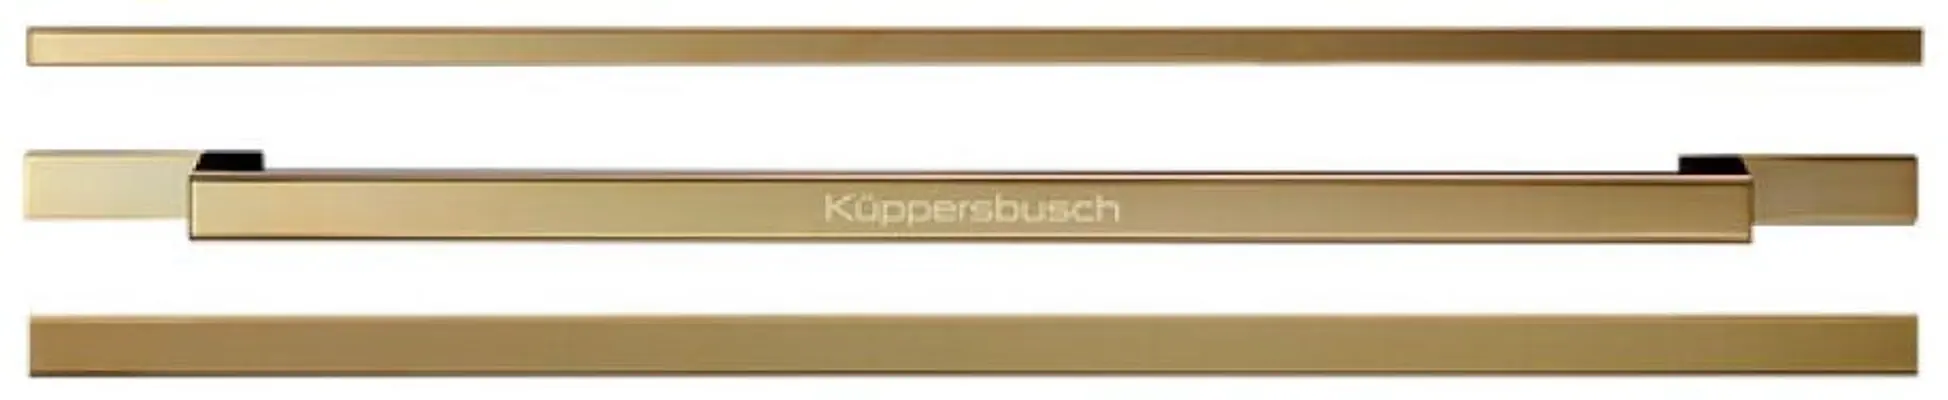 DK4004-Kuppersbusch-Koel-vries-accessoires